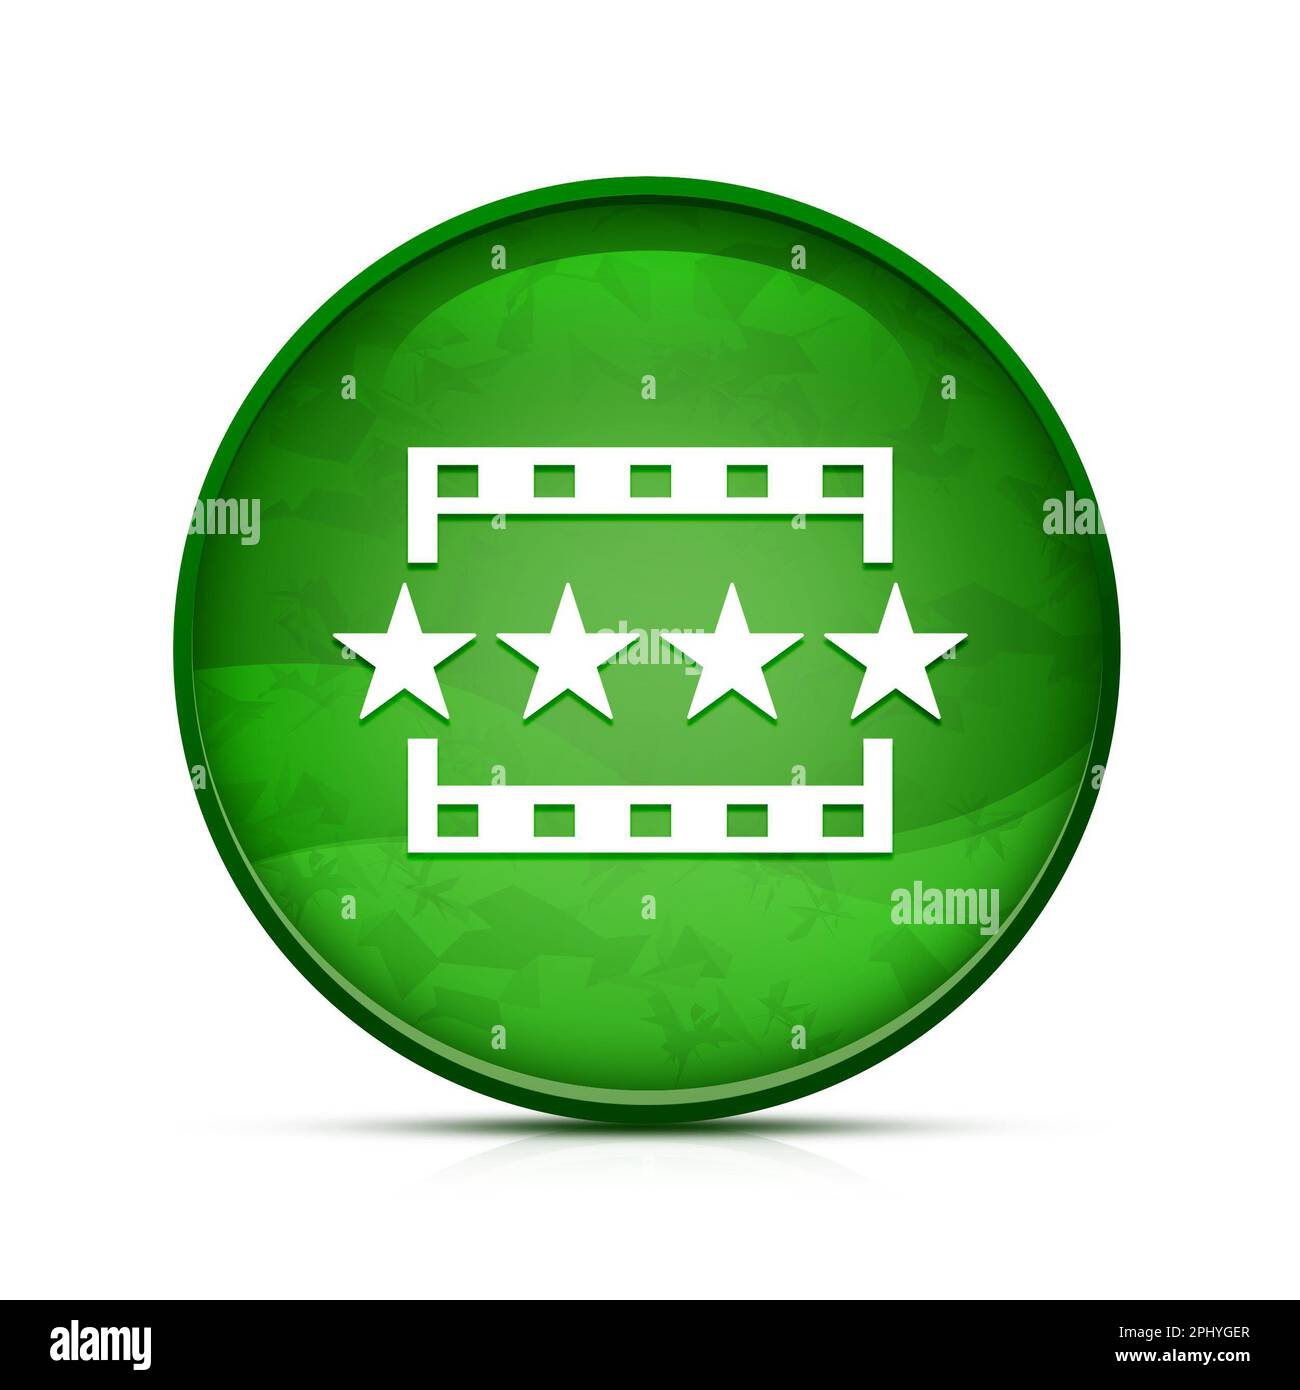 Movie reviews icon on classy splash green round button Stock Photo Alamy